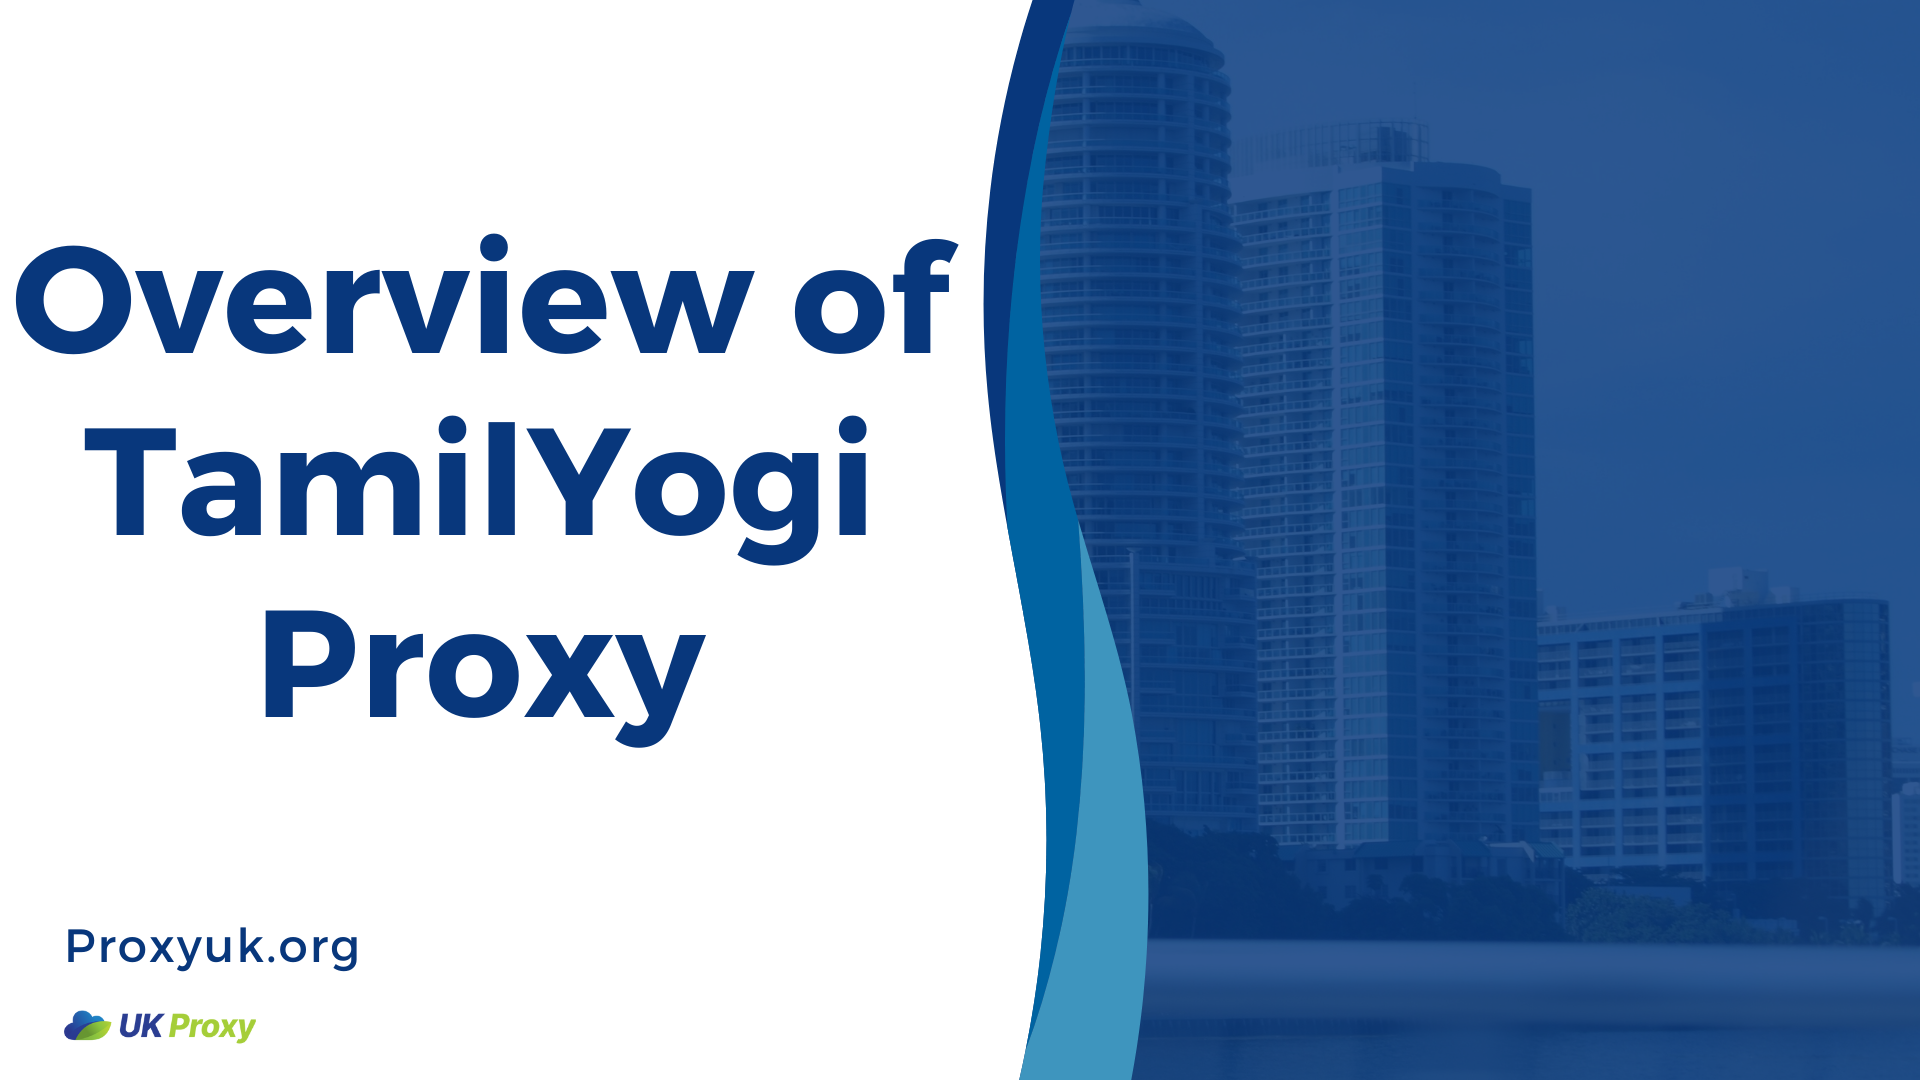 Overview of TamilYogi Proxy